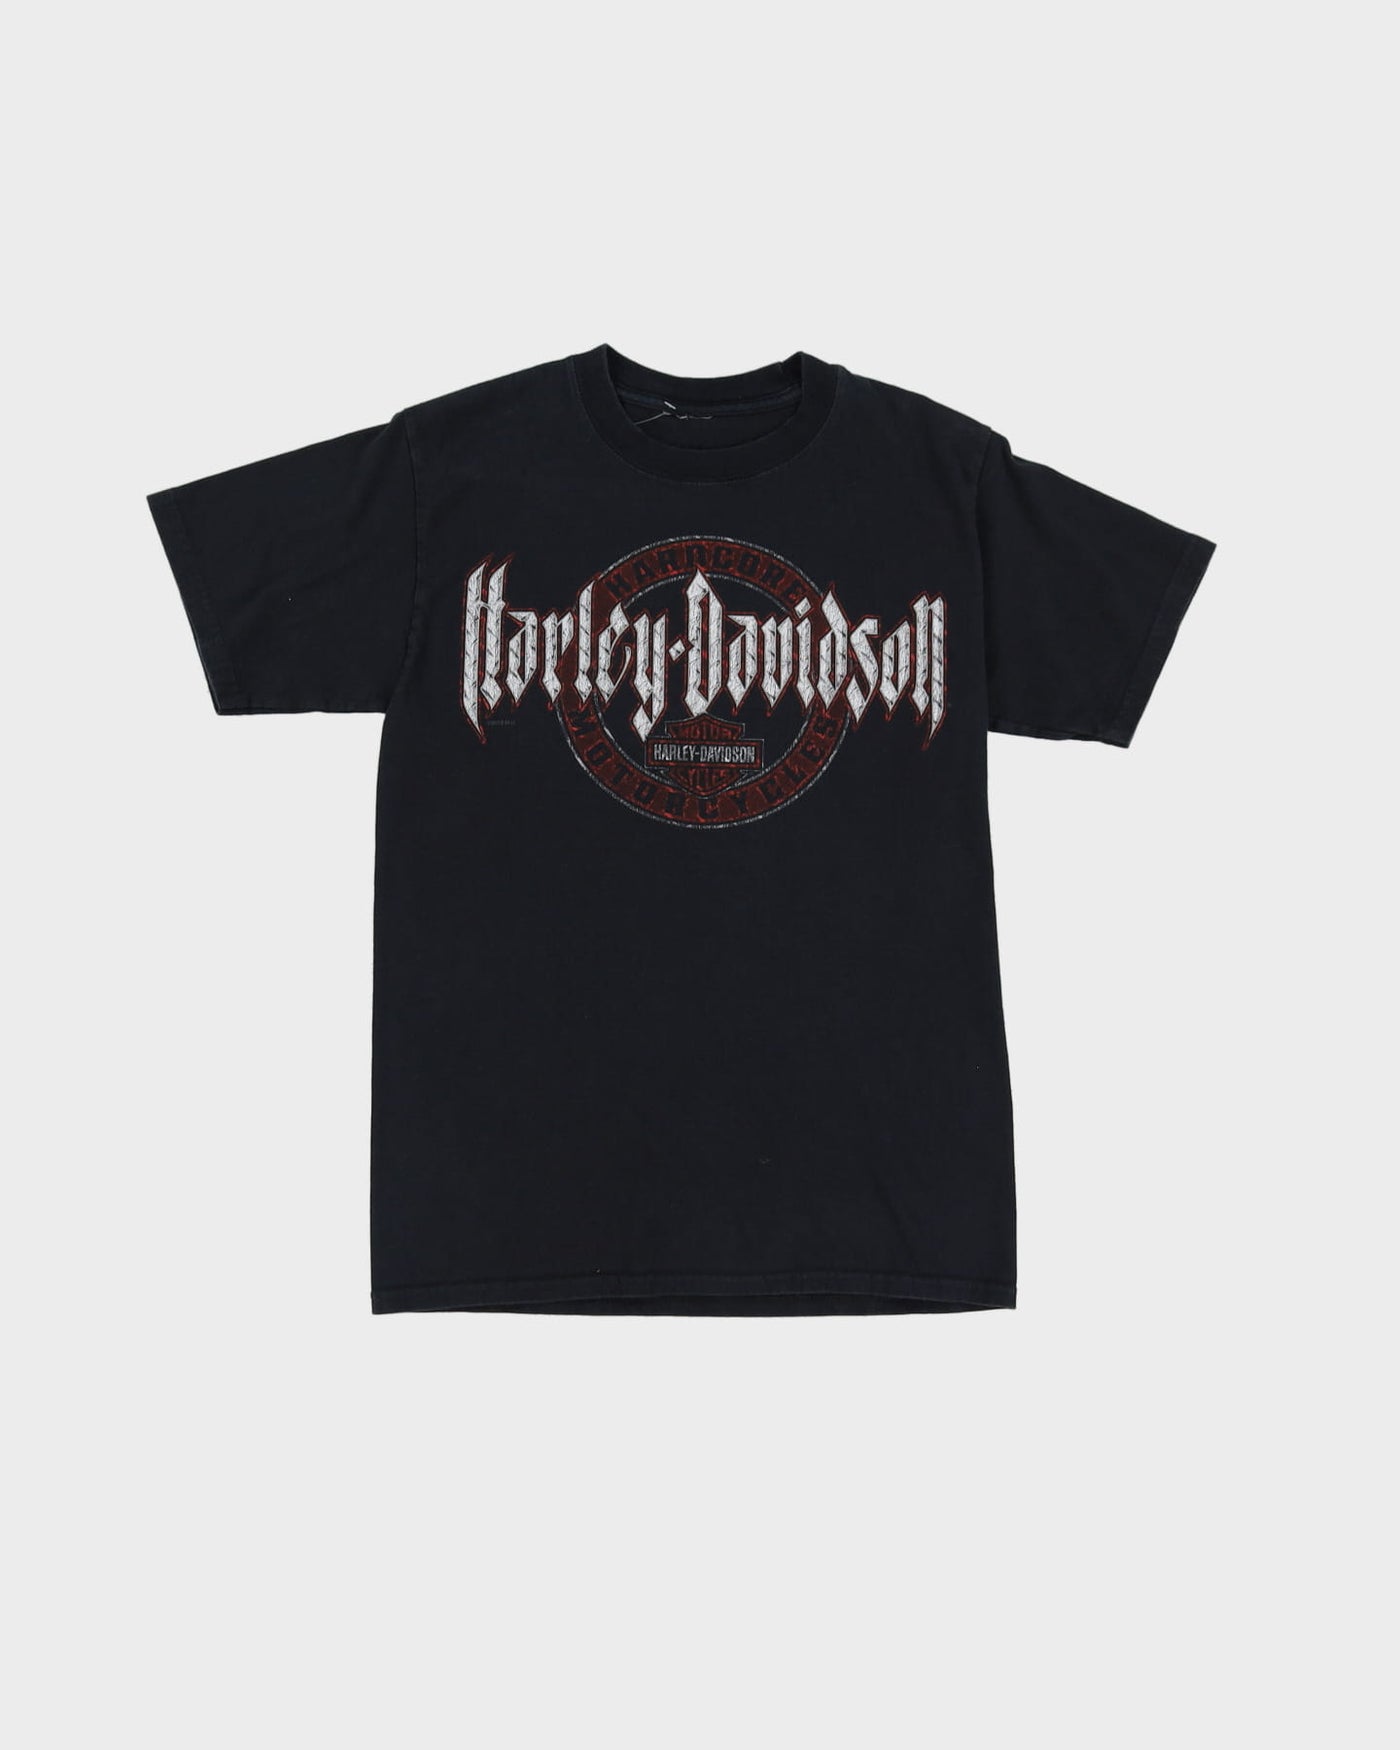 Harley Davidson Toronto Canada Black Graphic T-Shirt - S